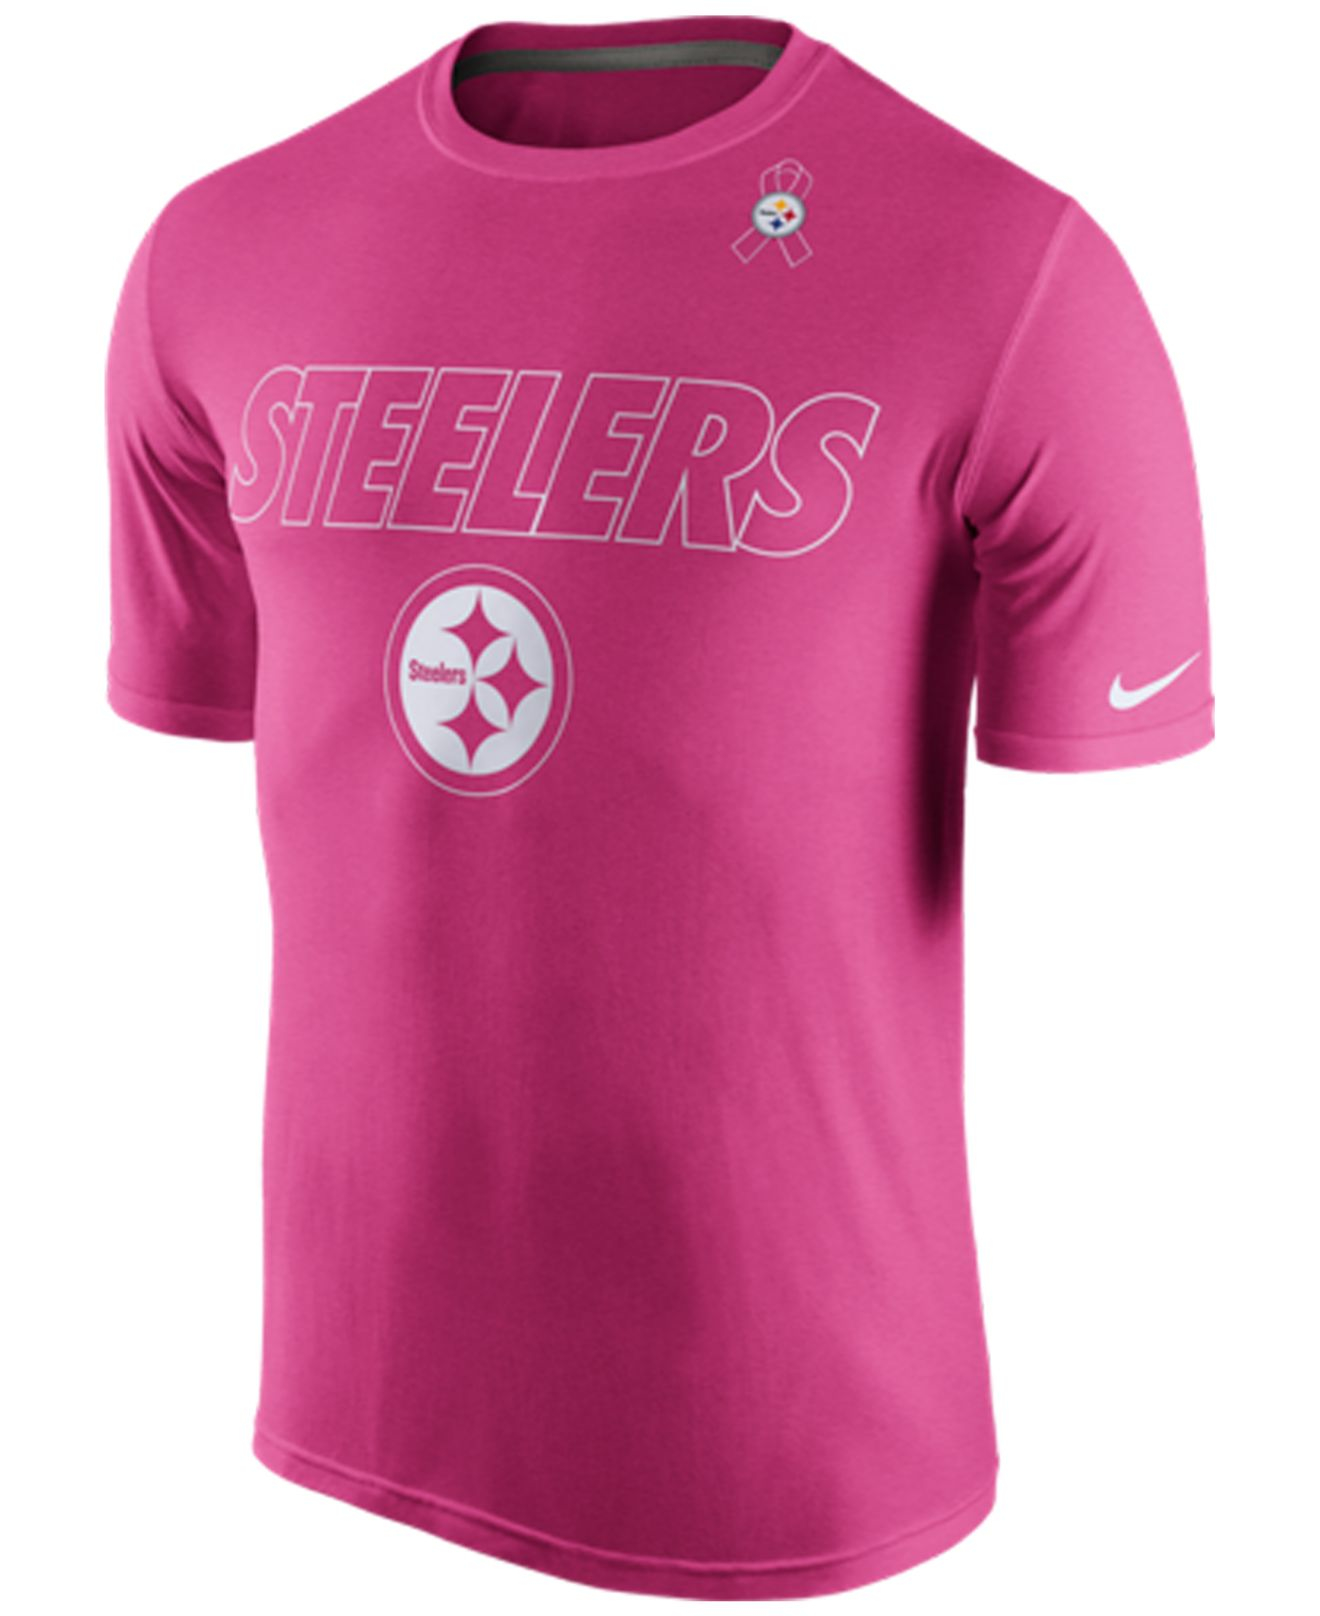 nfl breast cancer awareness apparel